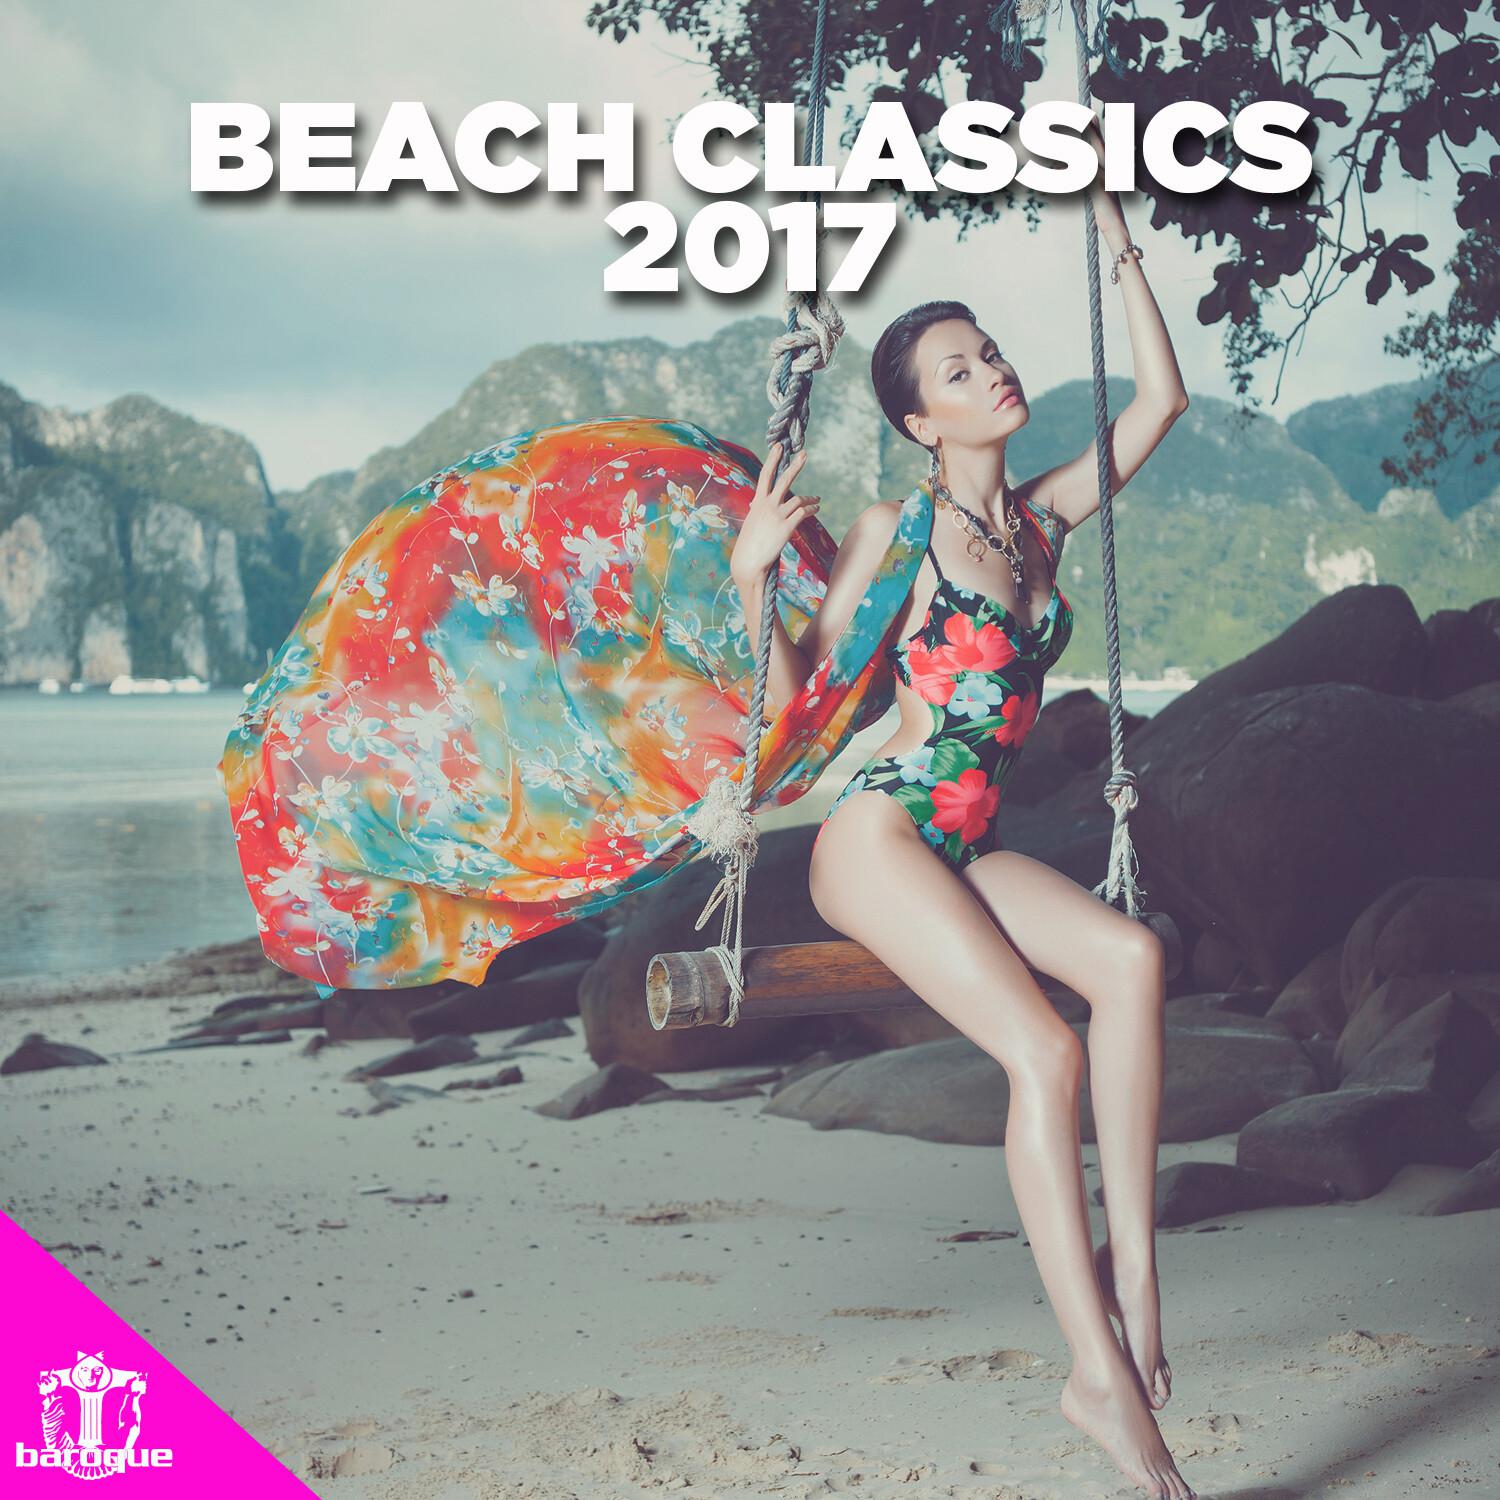 Beach Classics 2017